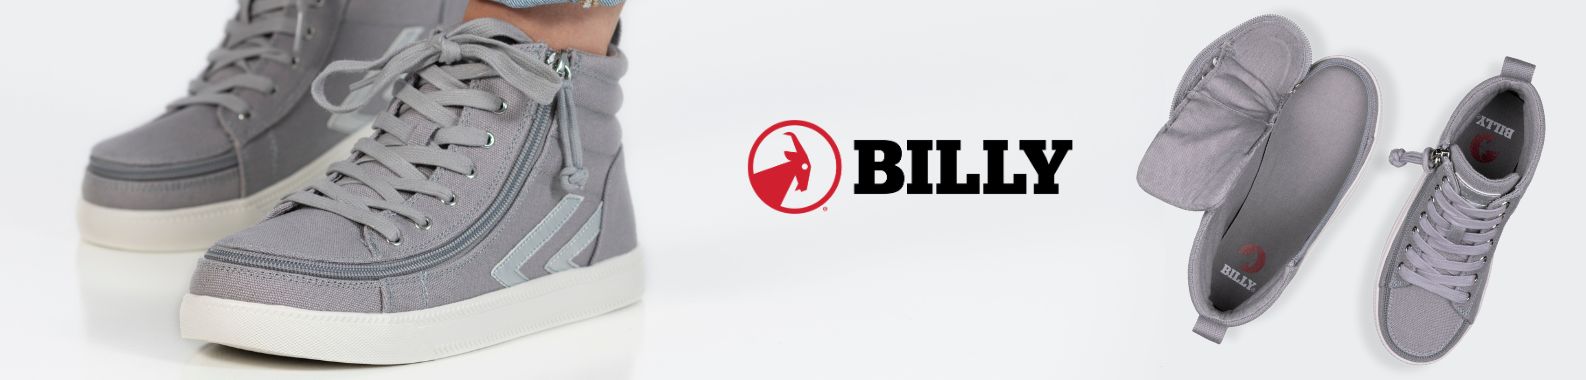 BILLY Footwear brand header image